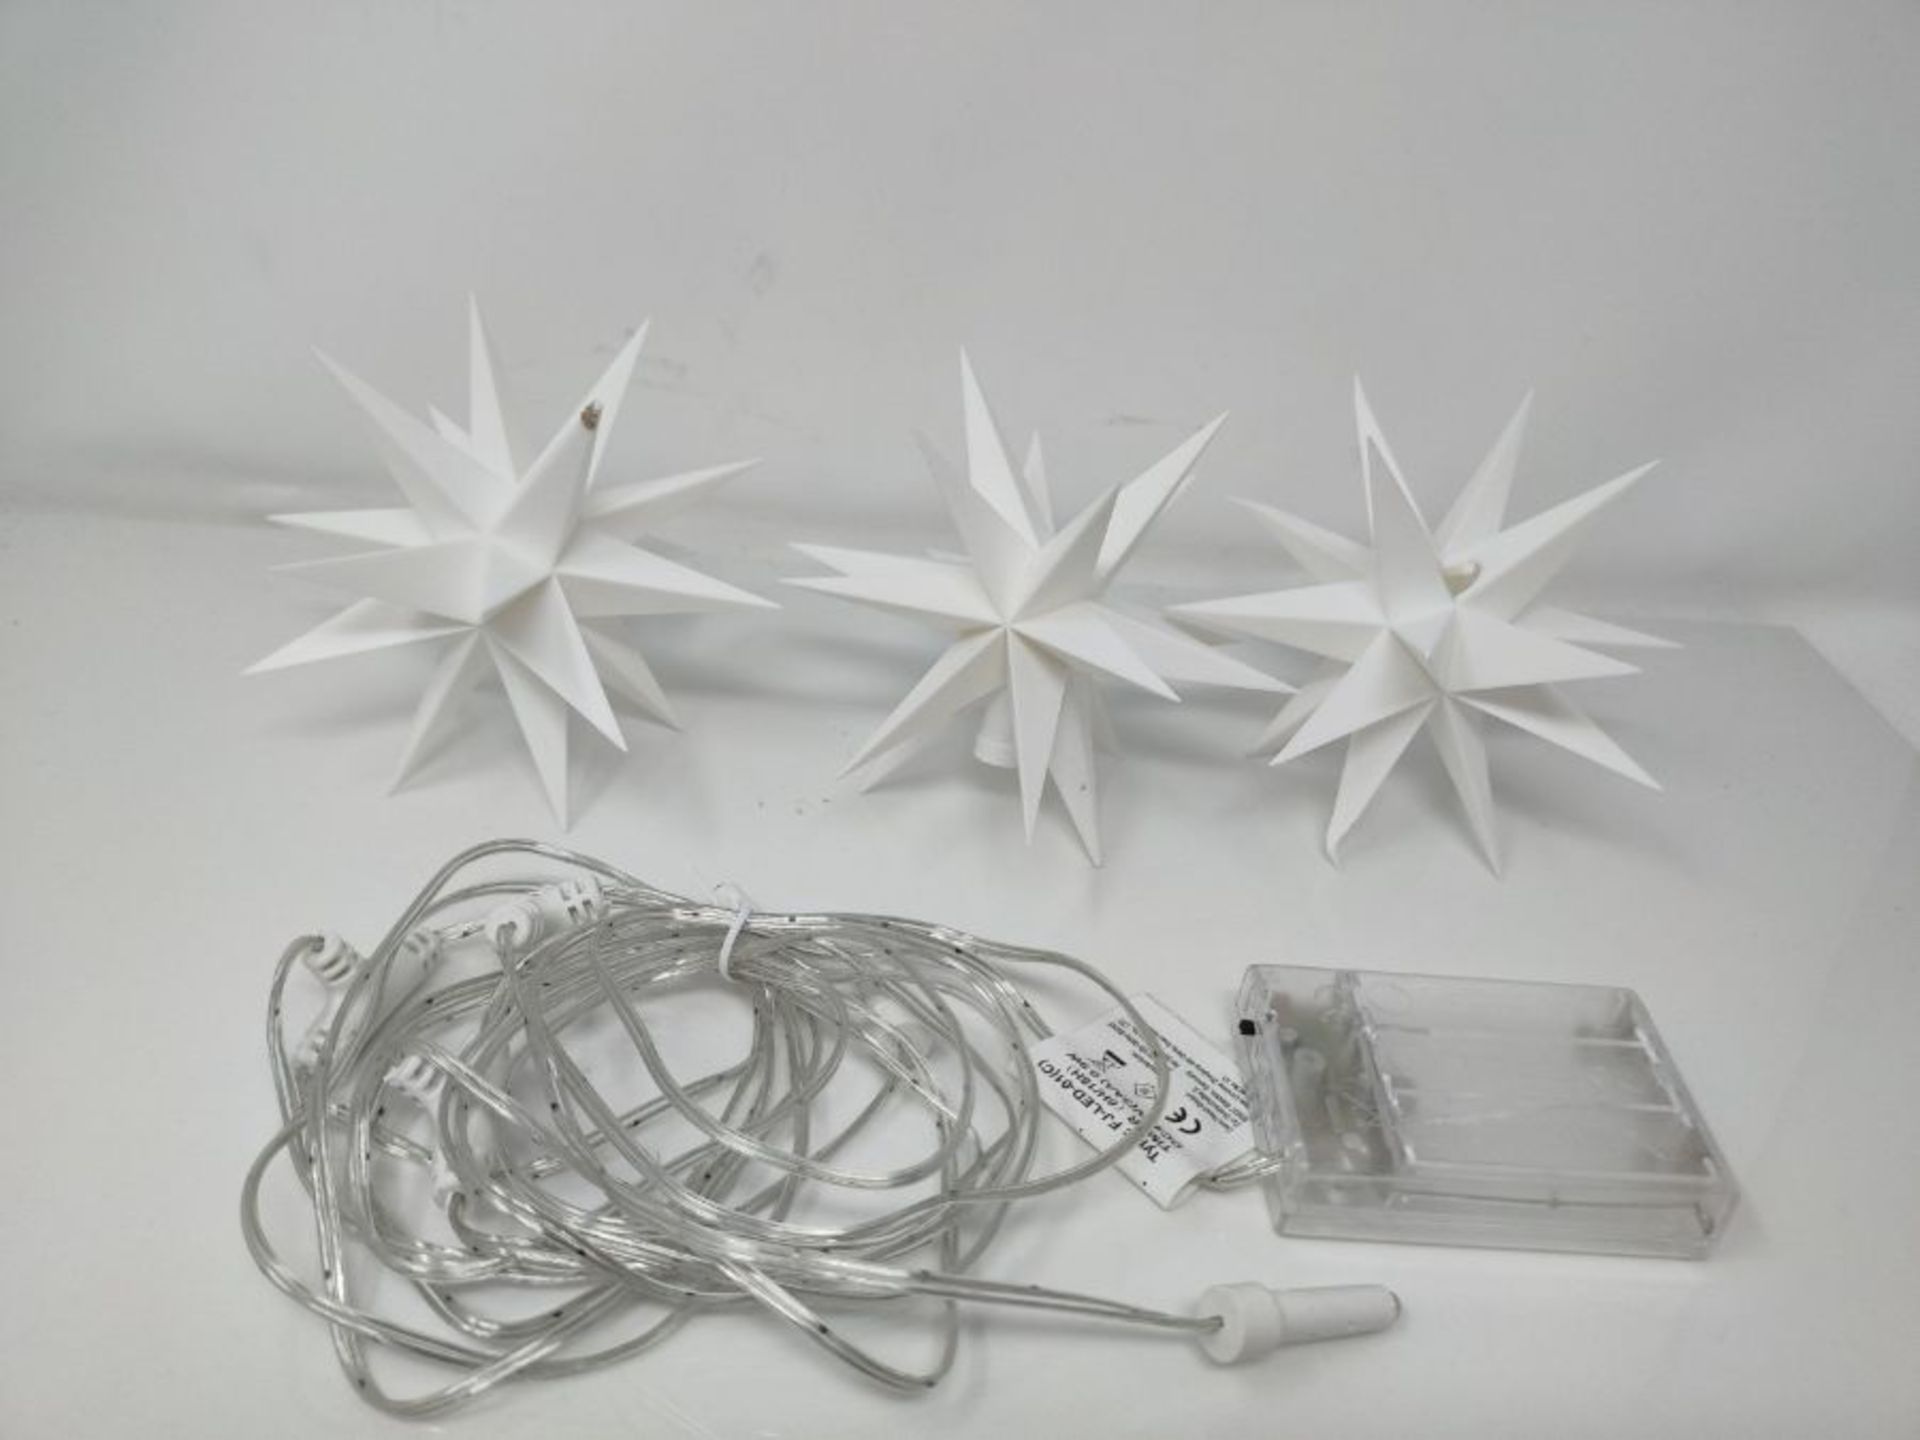 3D LED Stern Ø 12 cm Weihnachtsstern Batterie Ministern Innen Kunststoff Stern klein - Image 3 of 3